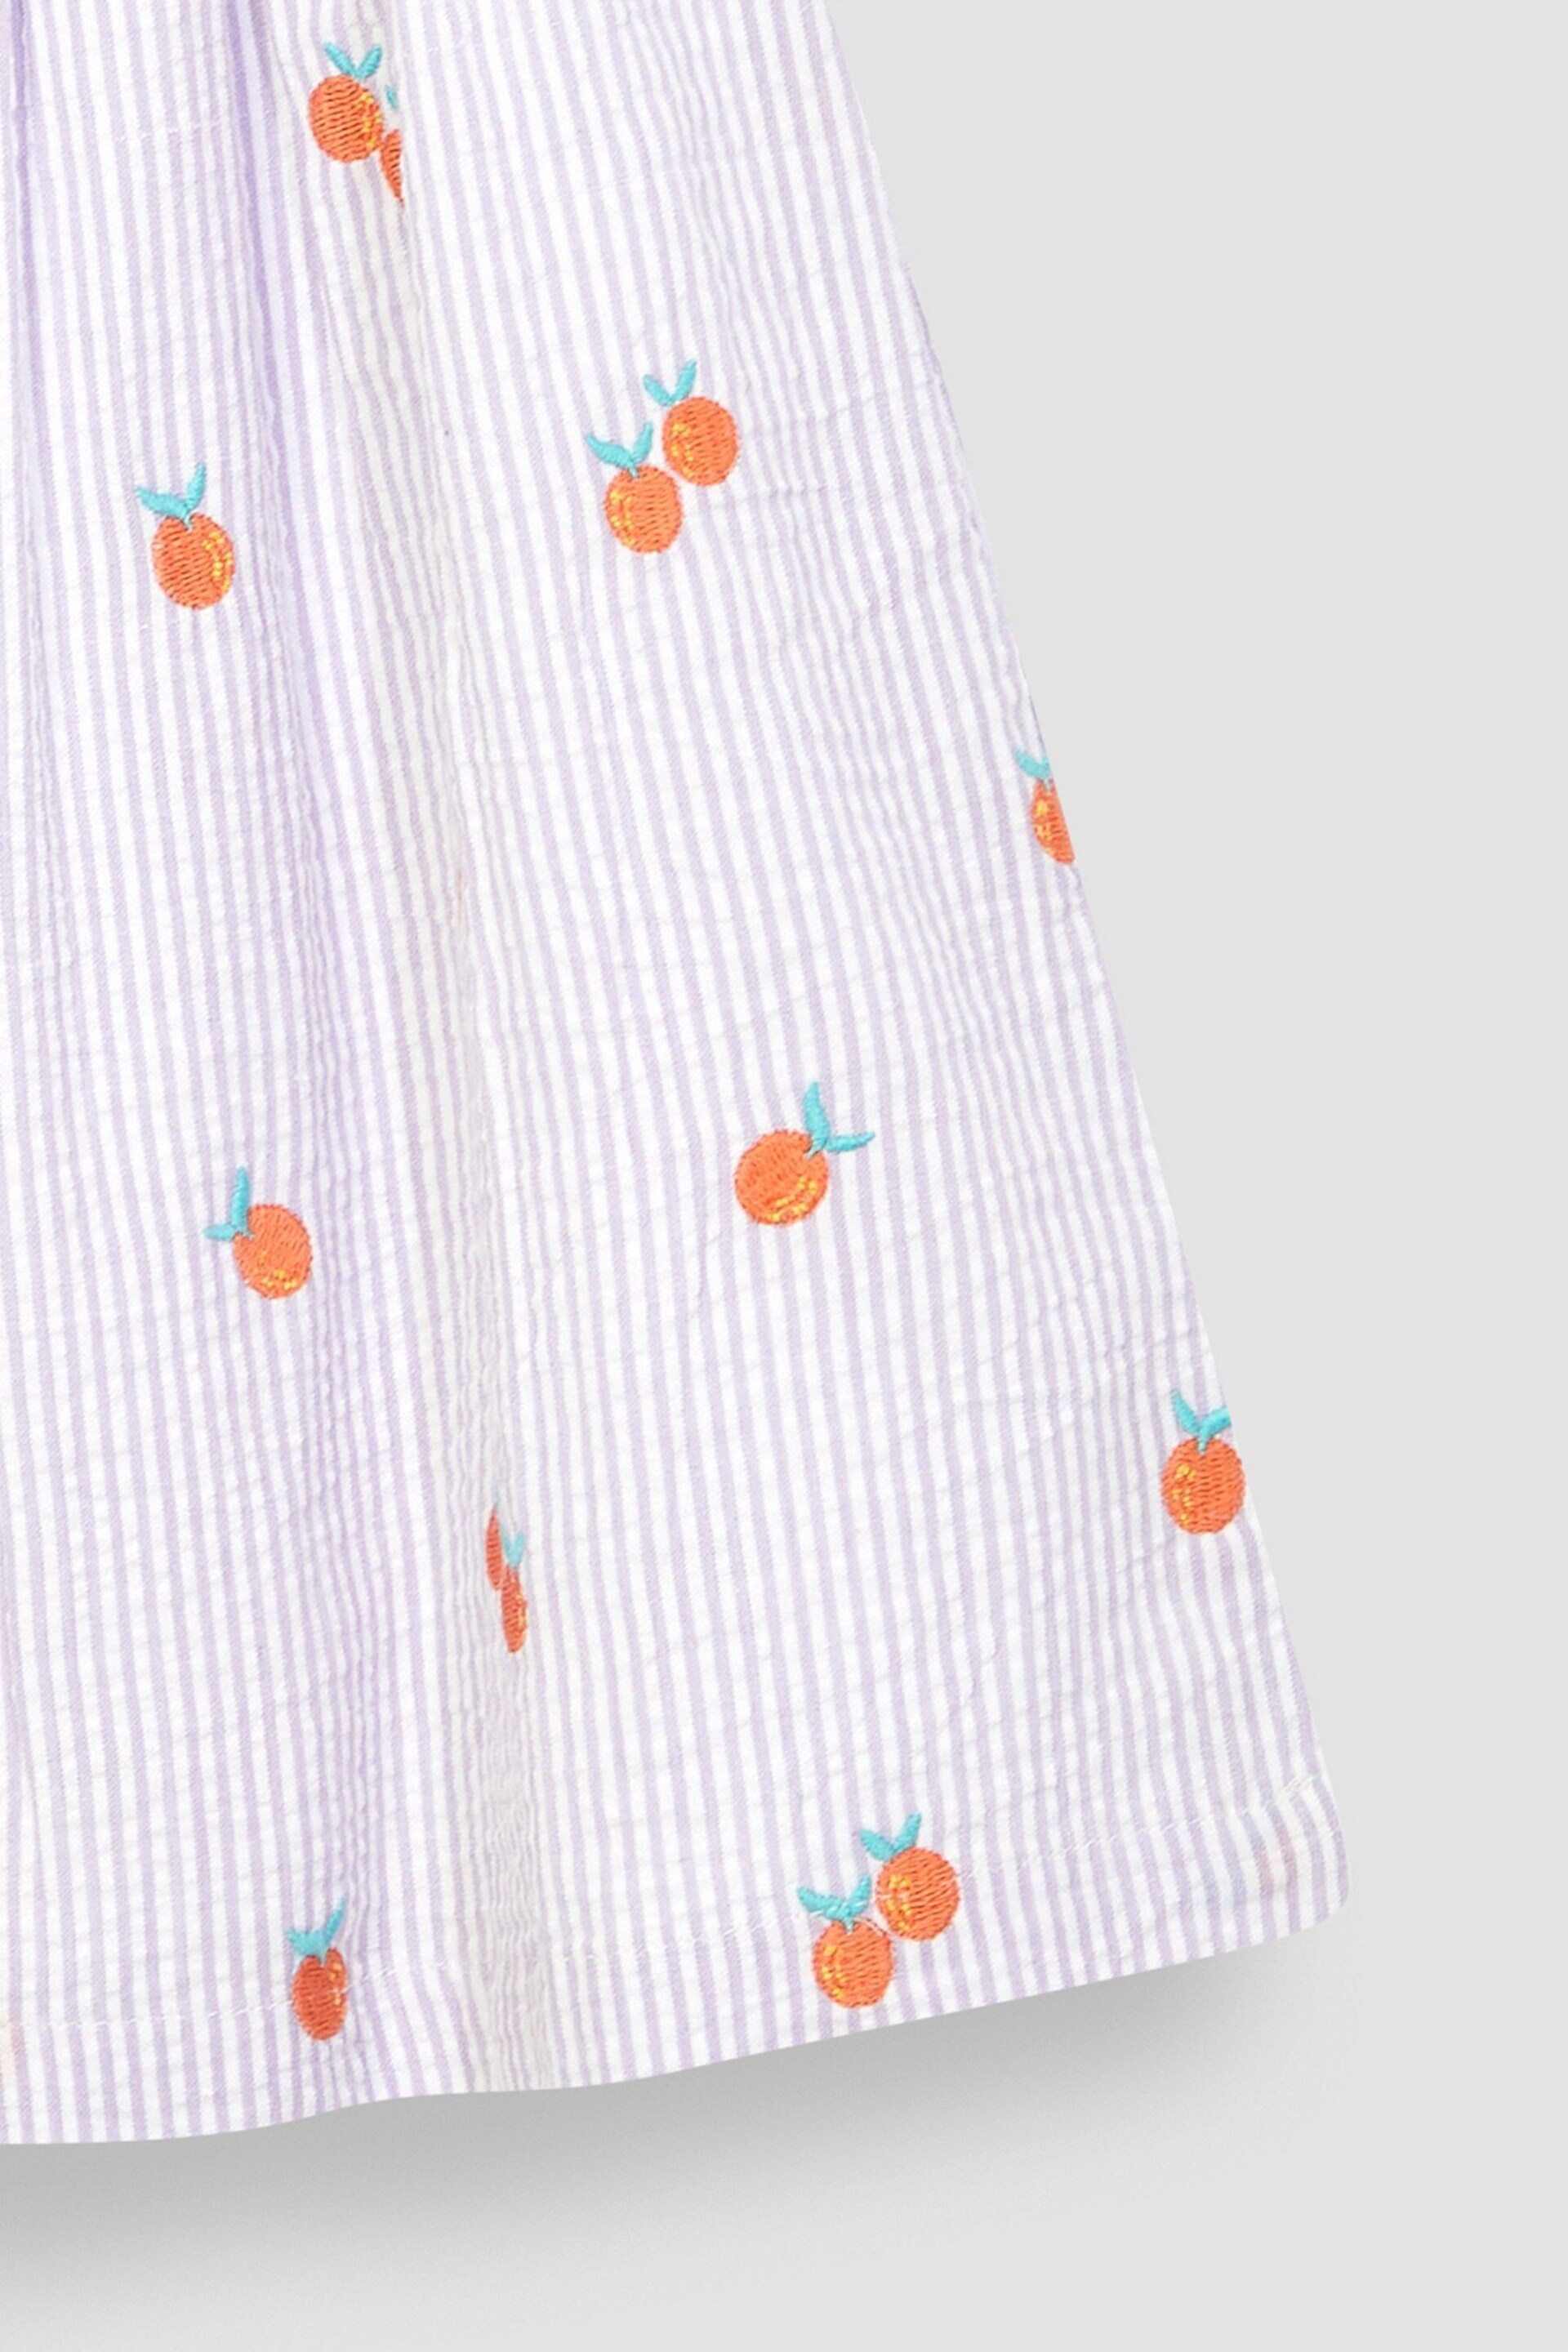 JoJo Maman Bébé Lilac Orange Stripe Embroidered Summer Dress - Image 3 of 3